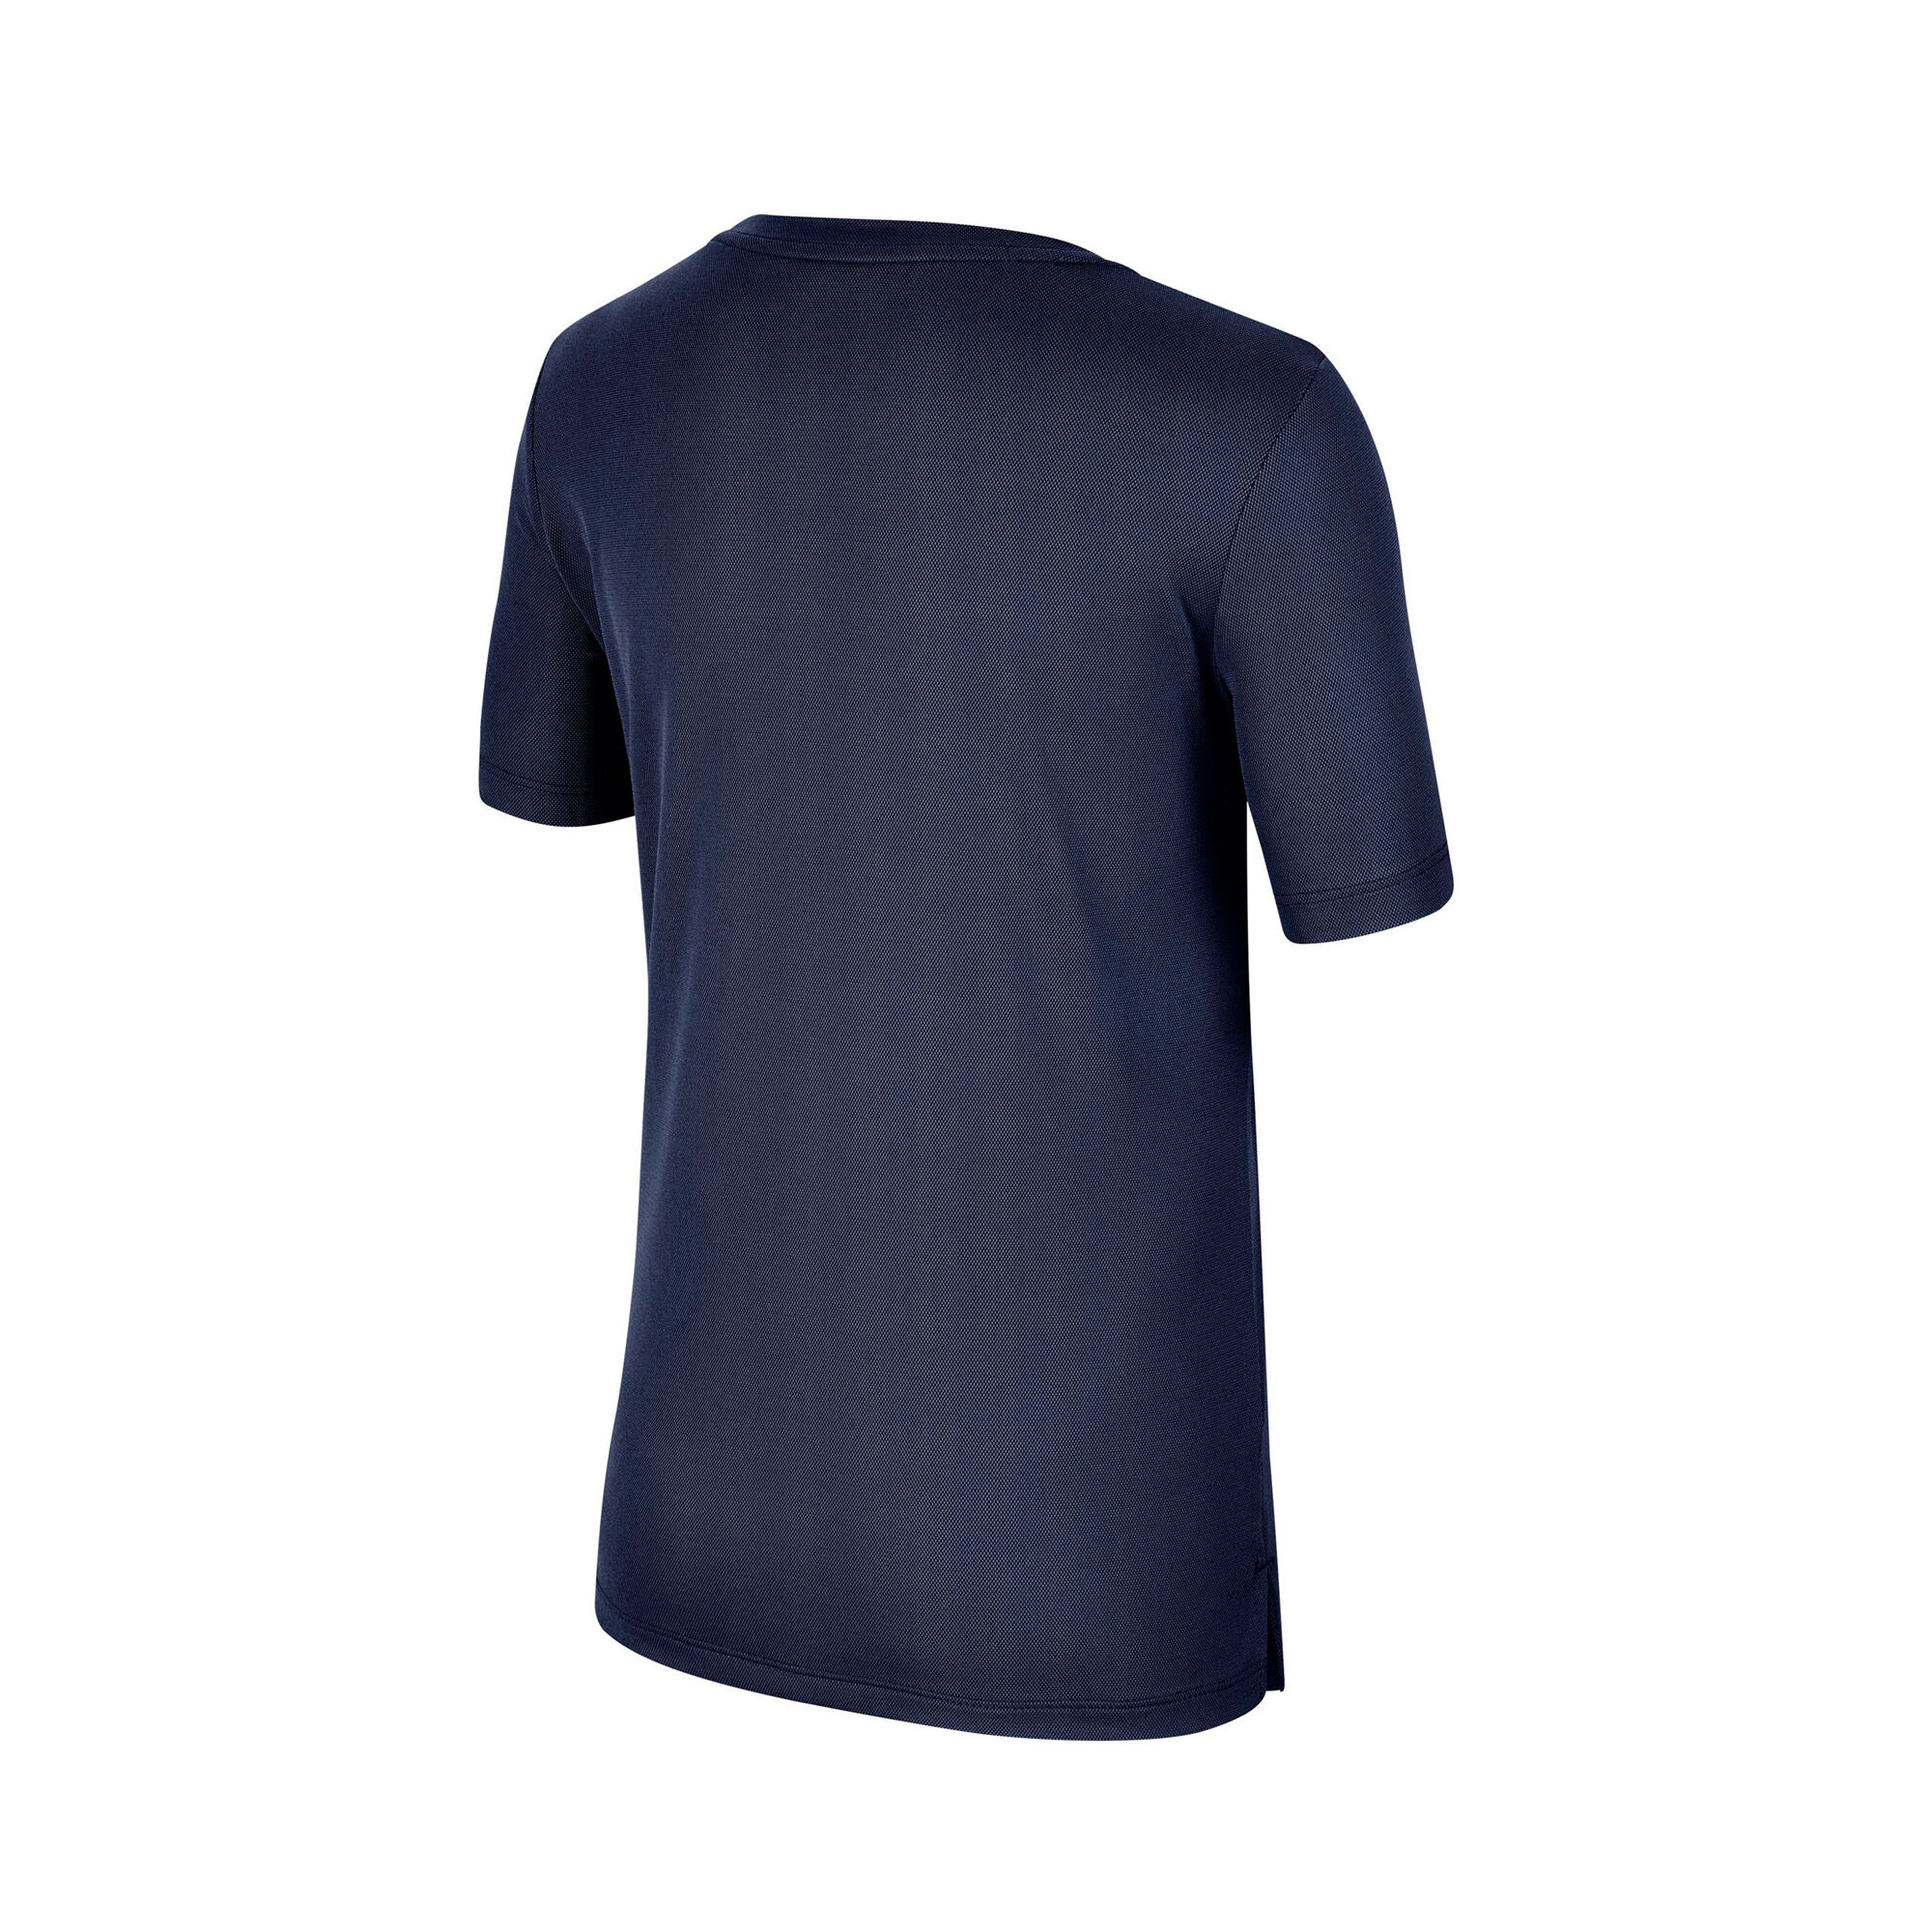 buy Nike T-Shirt Boys - Dark Blue, White online | Tennis-Point